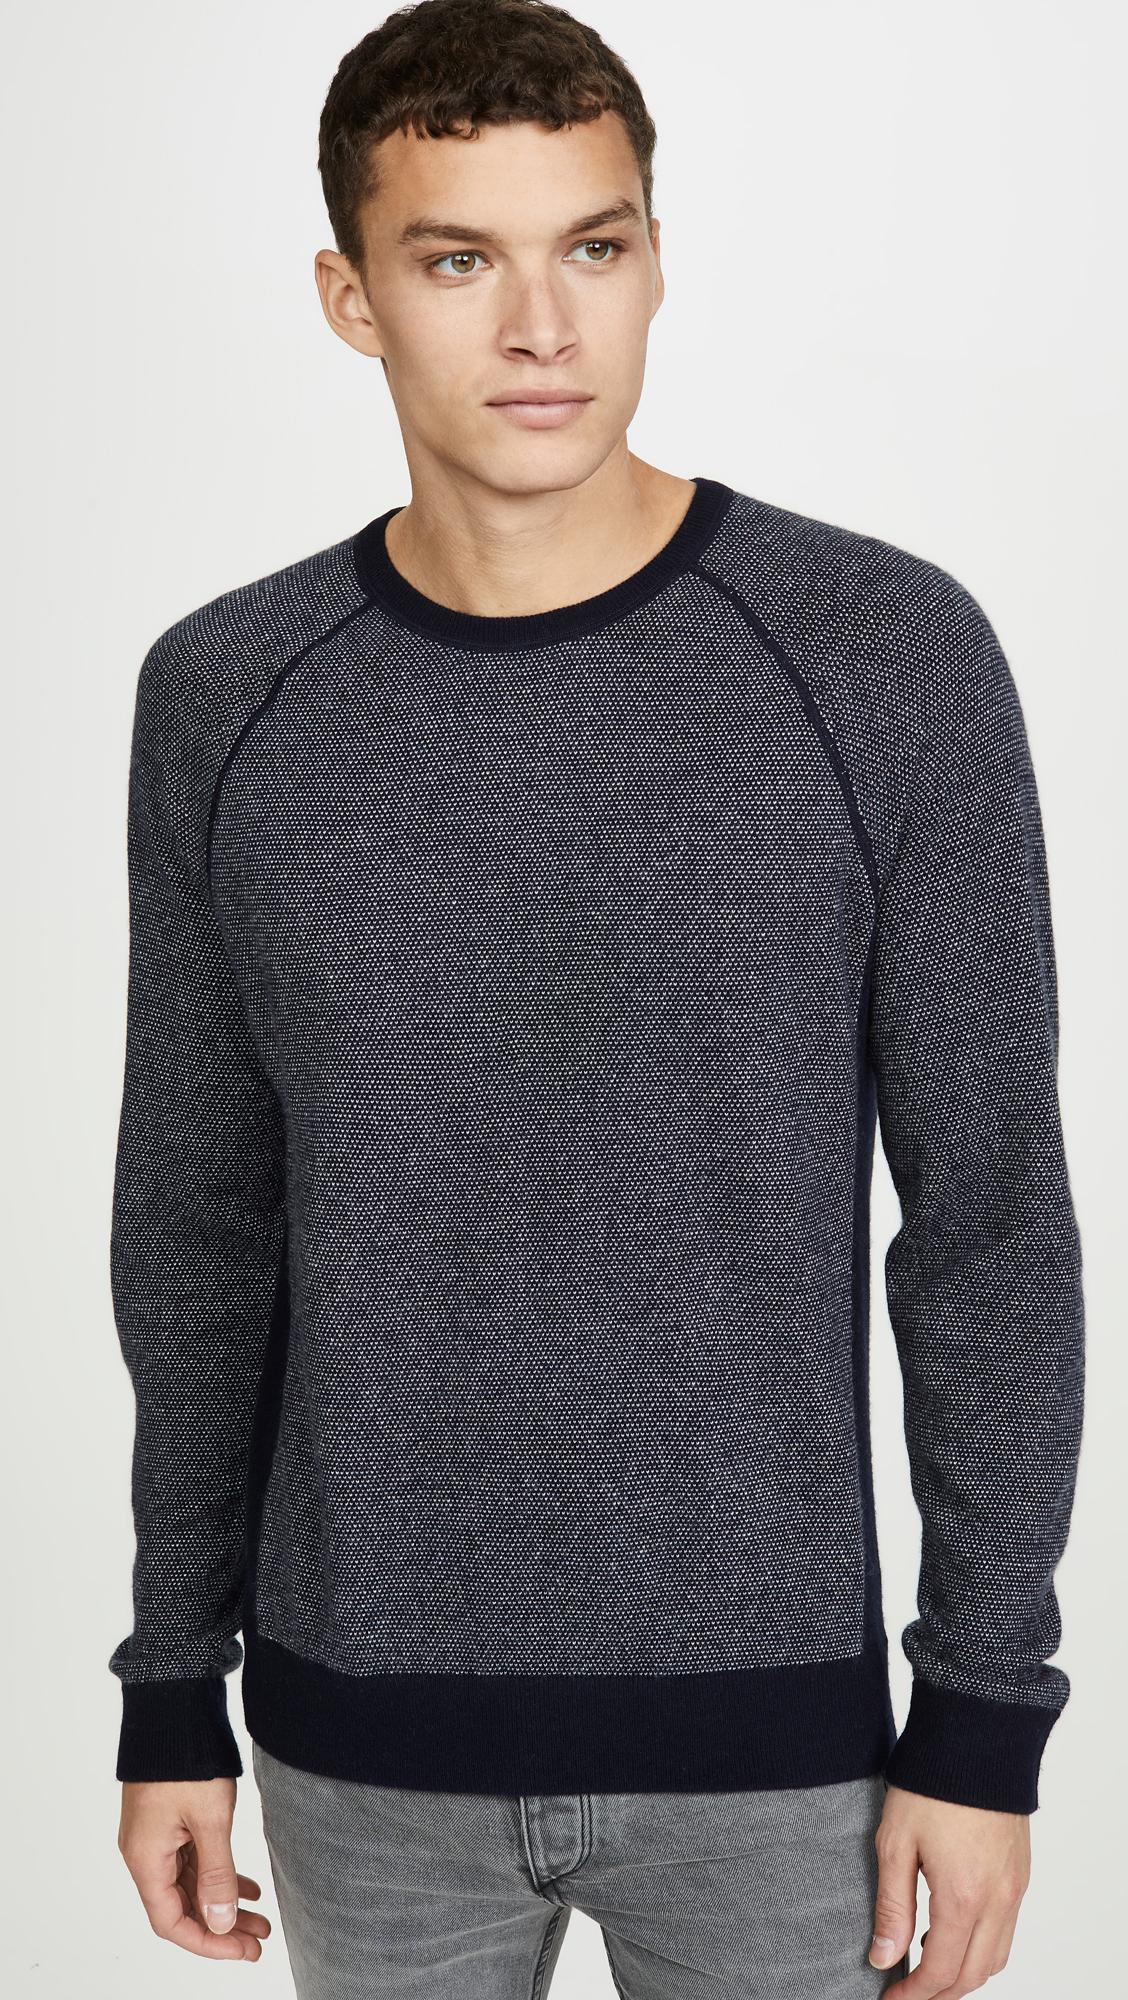 Vince Long Sleeve Birdseye Cashmere Sweater in Gray for Men - Lyst